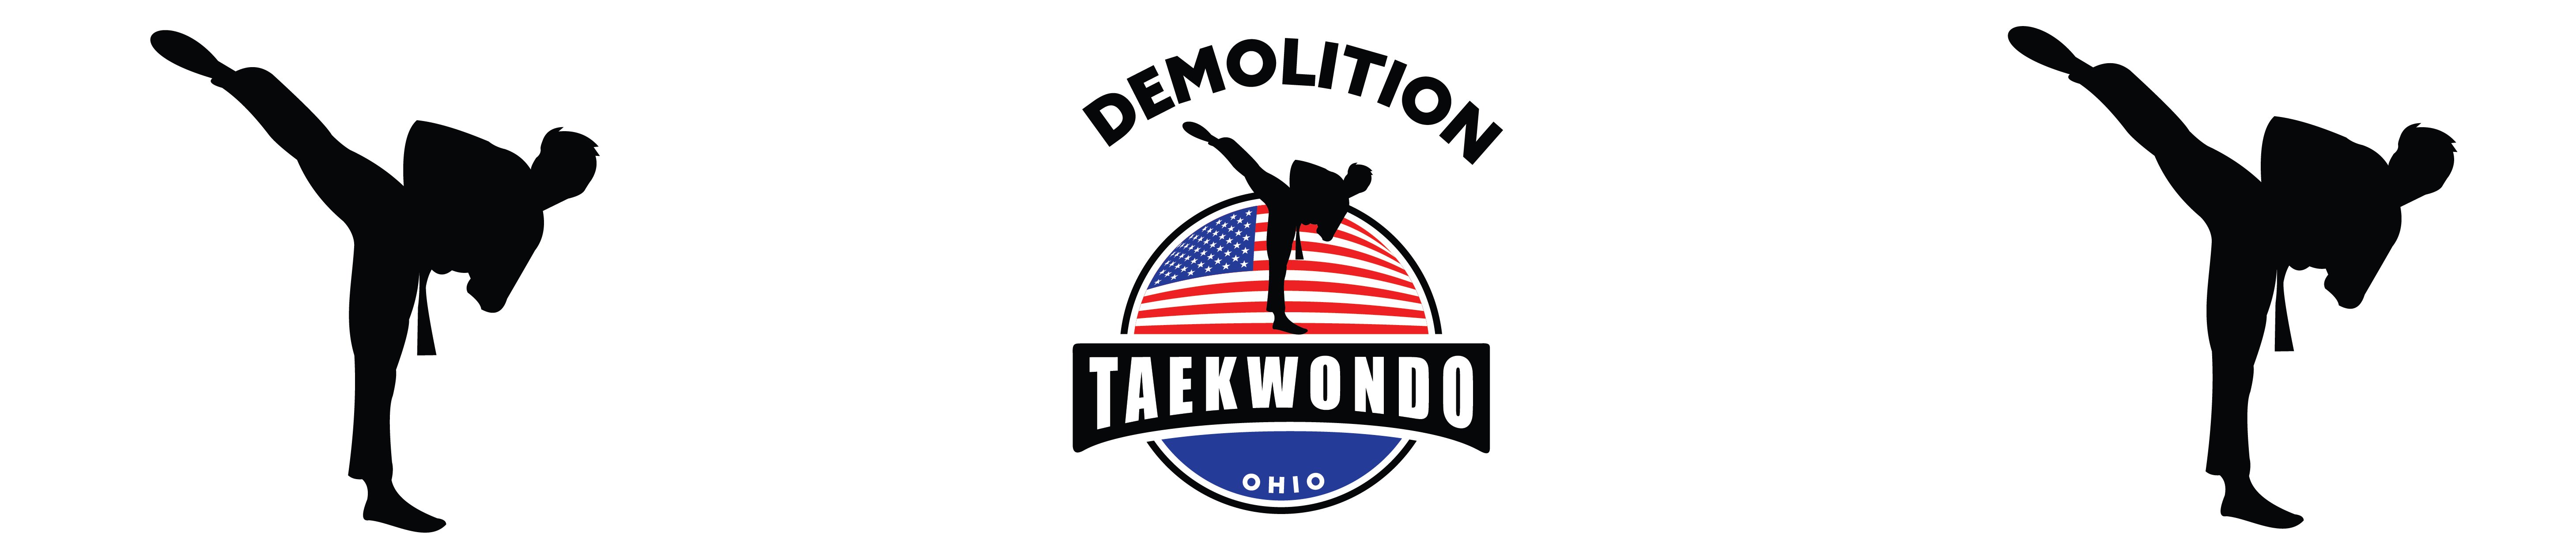 Demolition Taekwondo